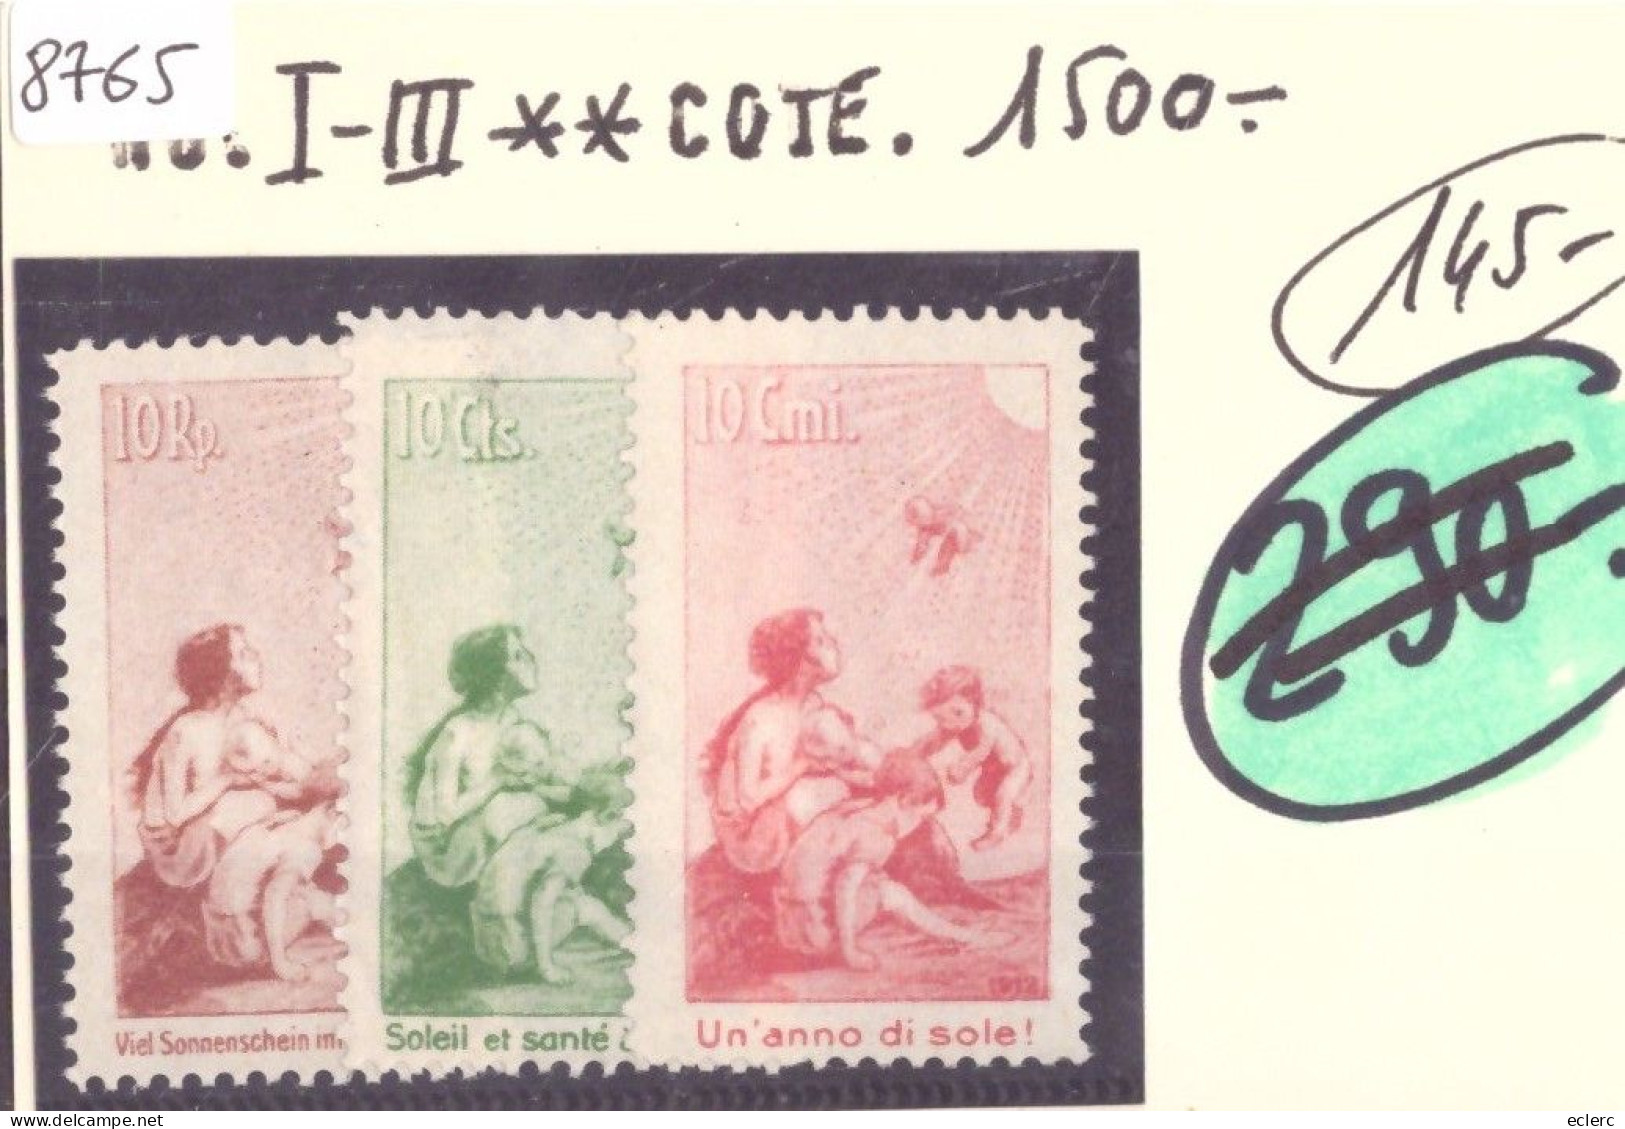 PRECURSEURS PRO JUVENTUTE No I-III ** ( NEUFS SANS CHARNIERE )  - COTE: 1500.- - Unused Stamps